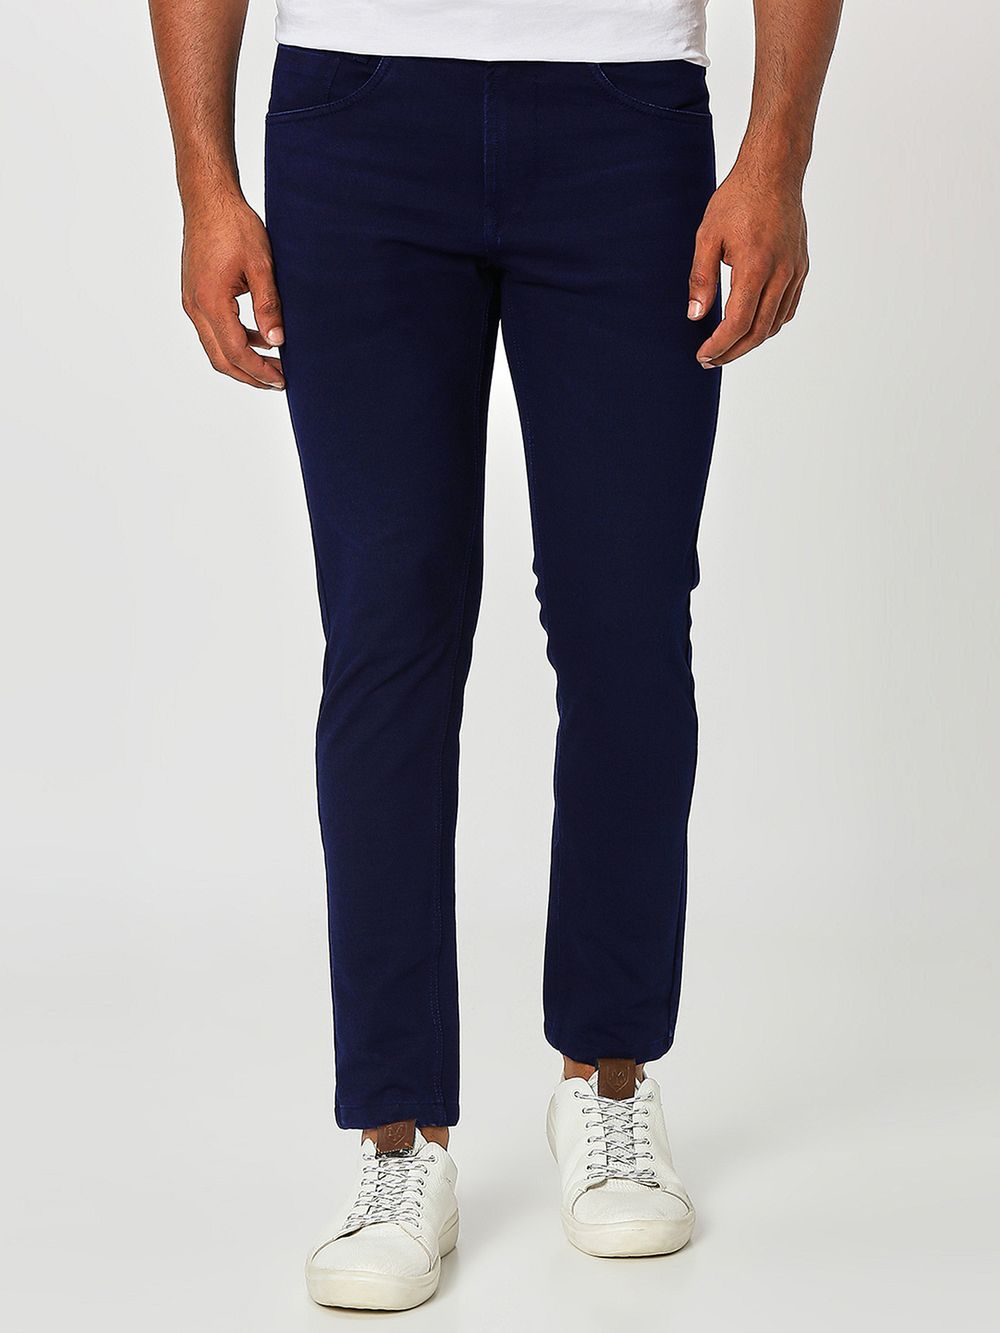 Deep Indigo Blue Ankle Length Jeans